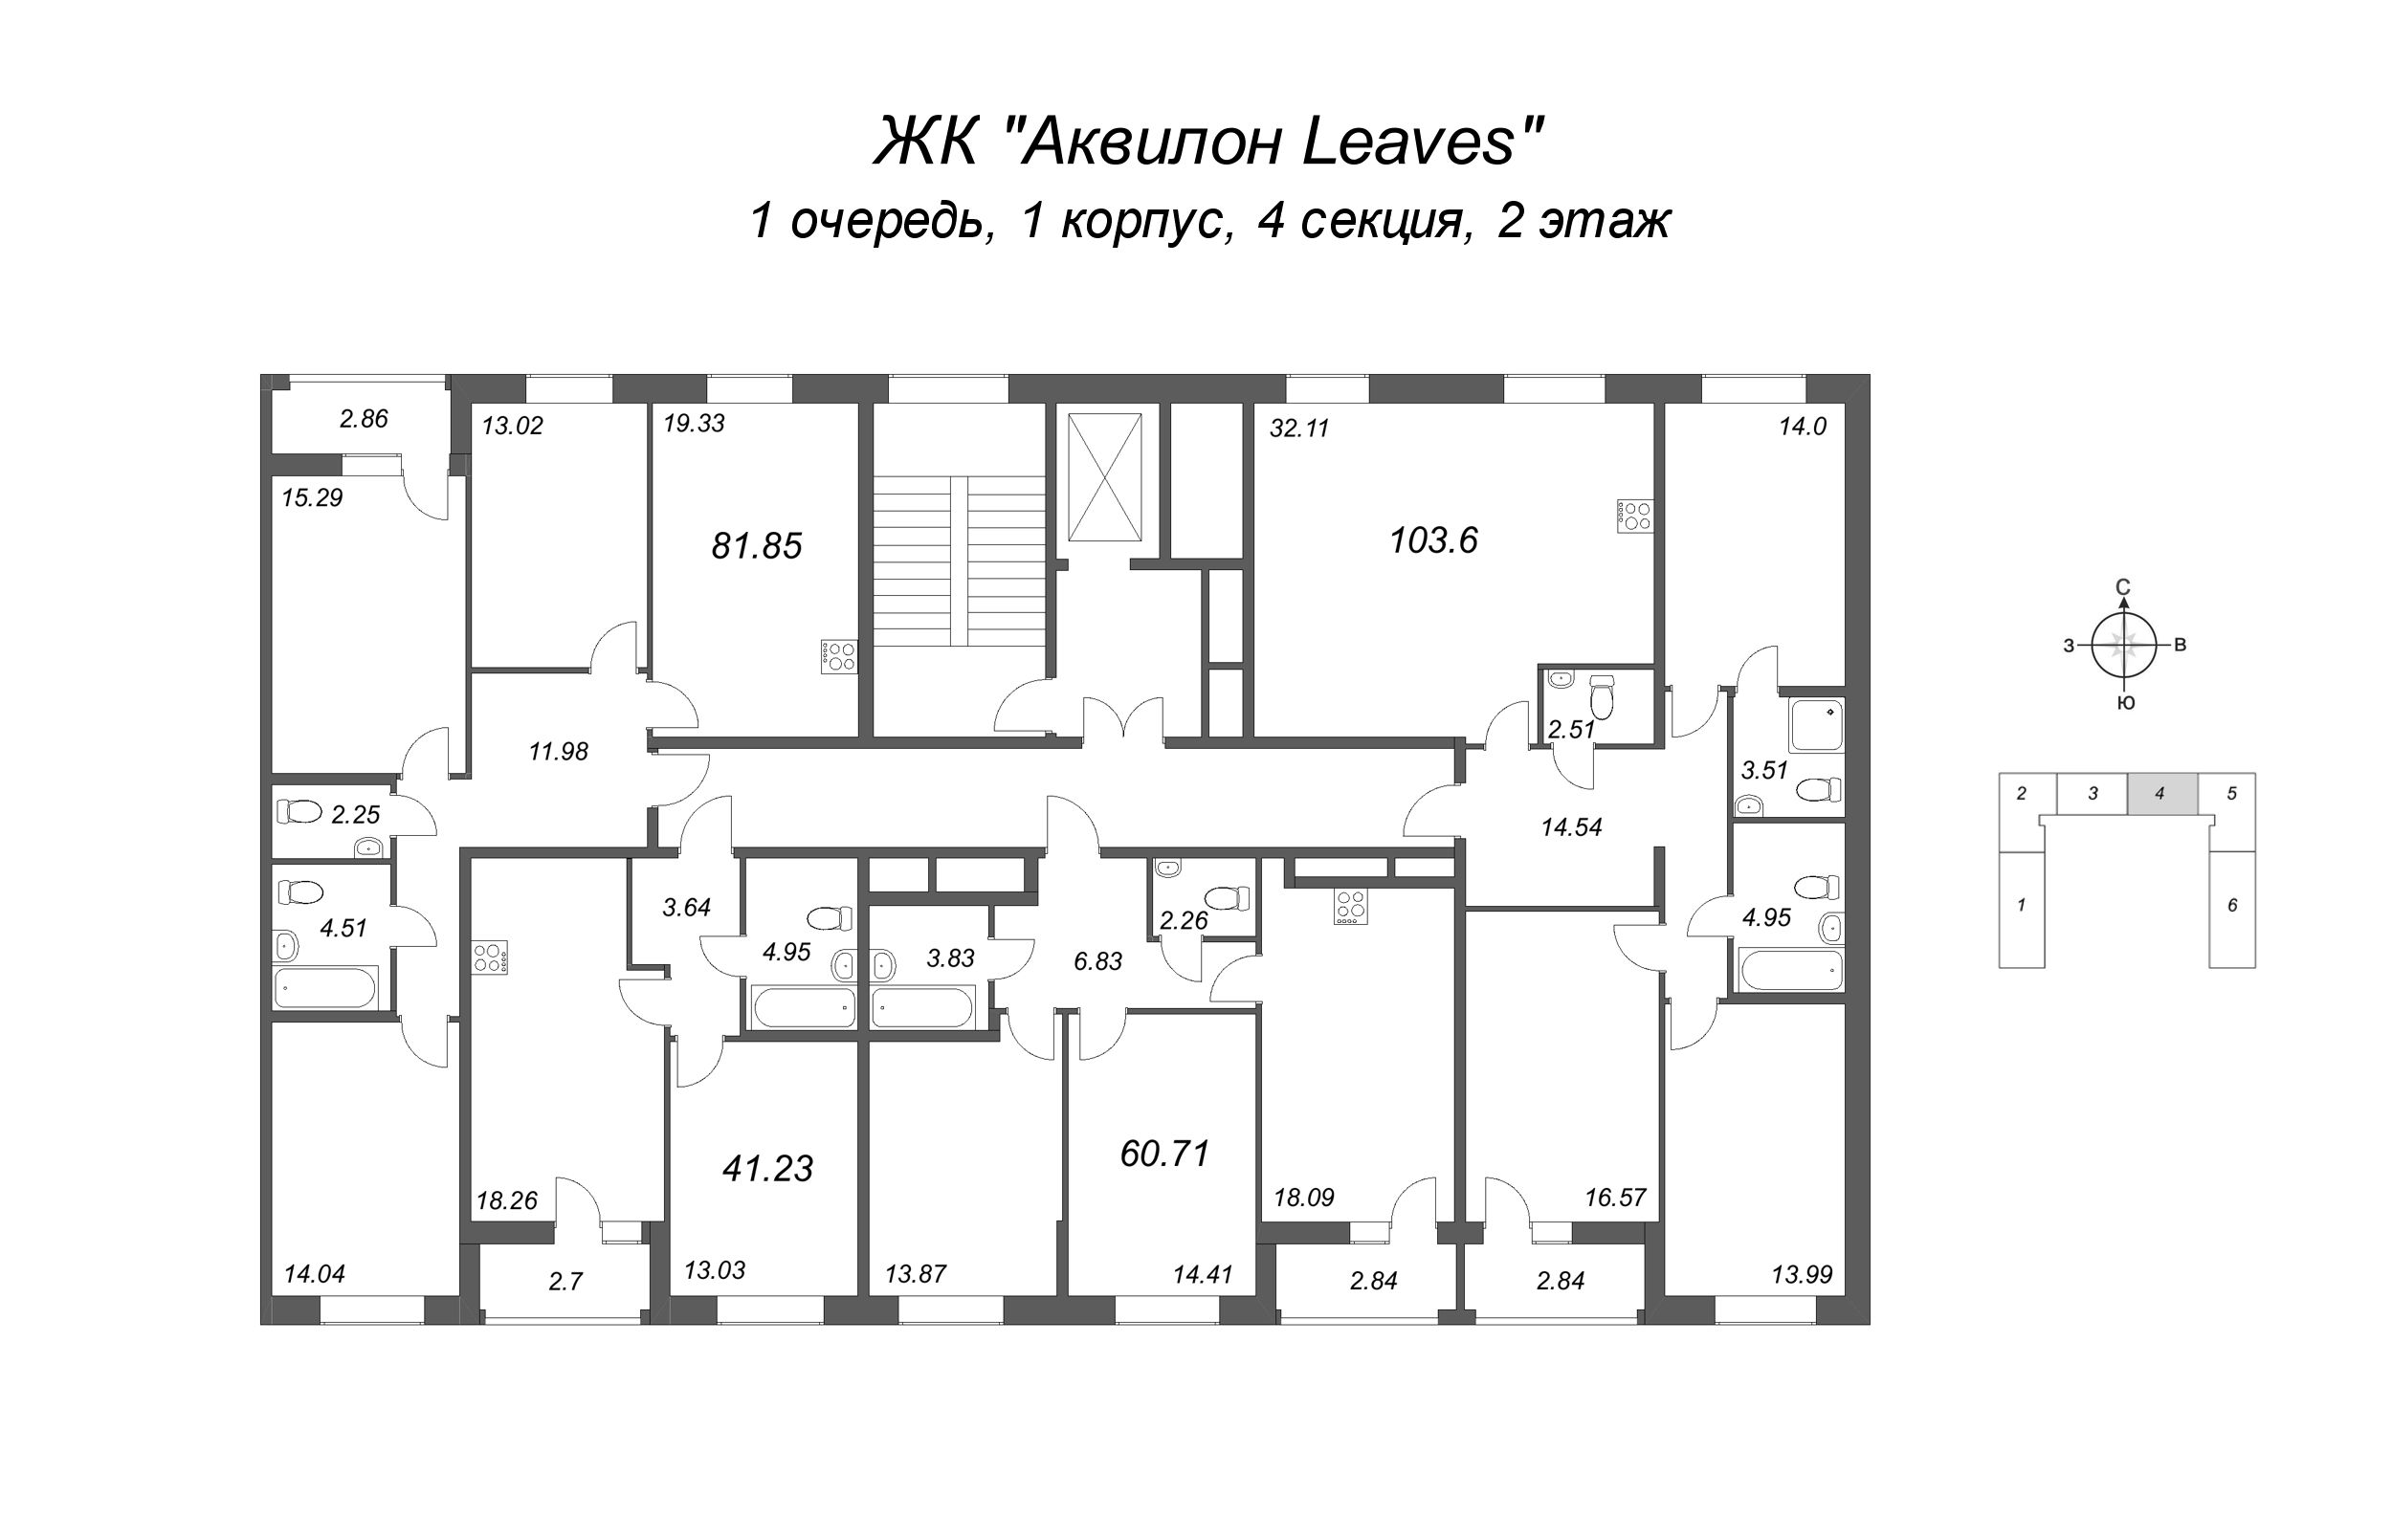 4-комнатная (Евро) квартира, 103.6 м² - планировка этажа